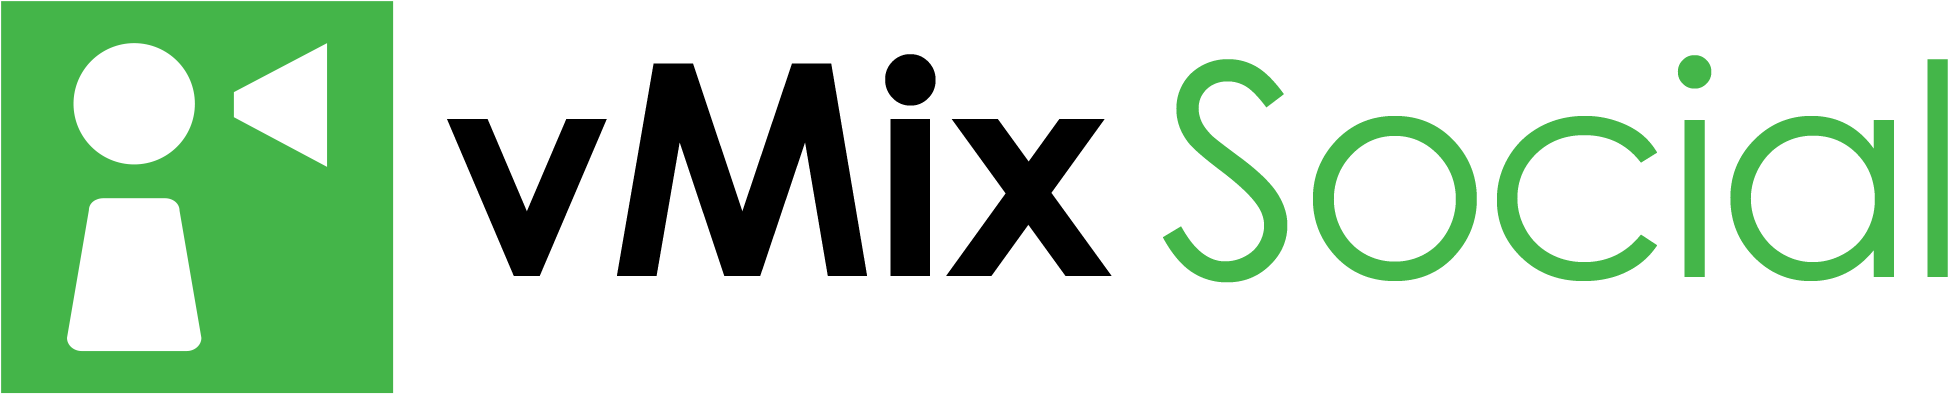 Vmix Social Logo - Vmix Sd Upgrade (from Basic Hd) (2047x500)